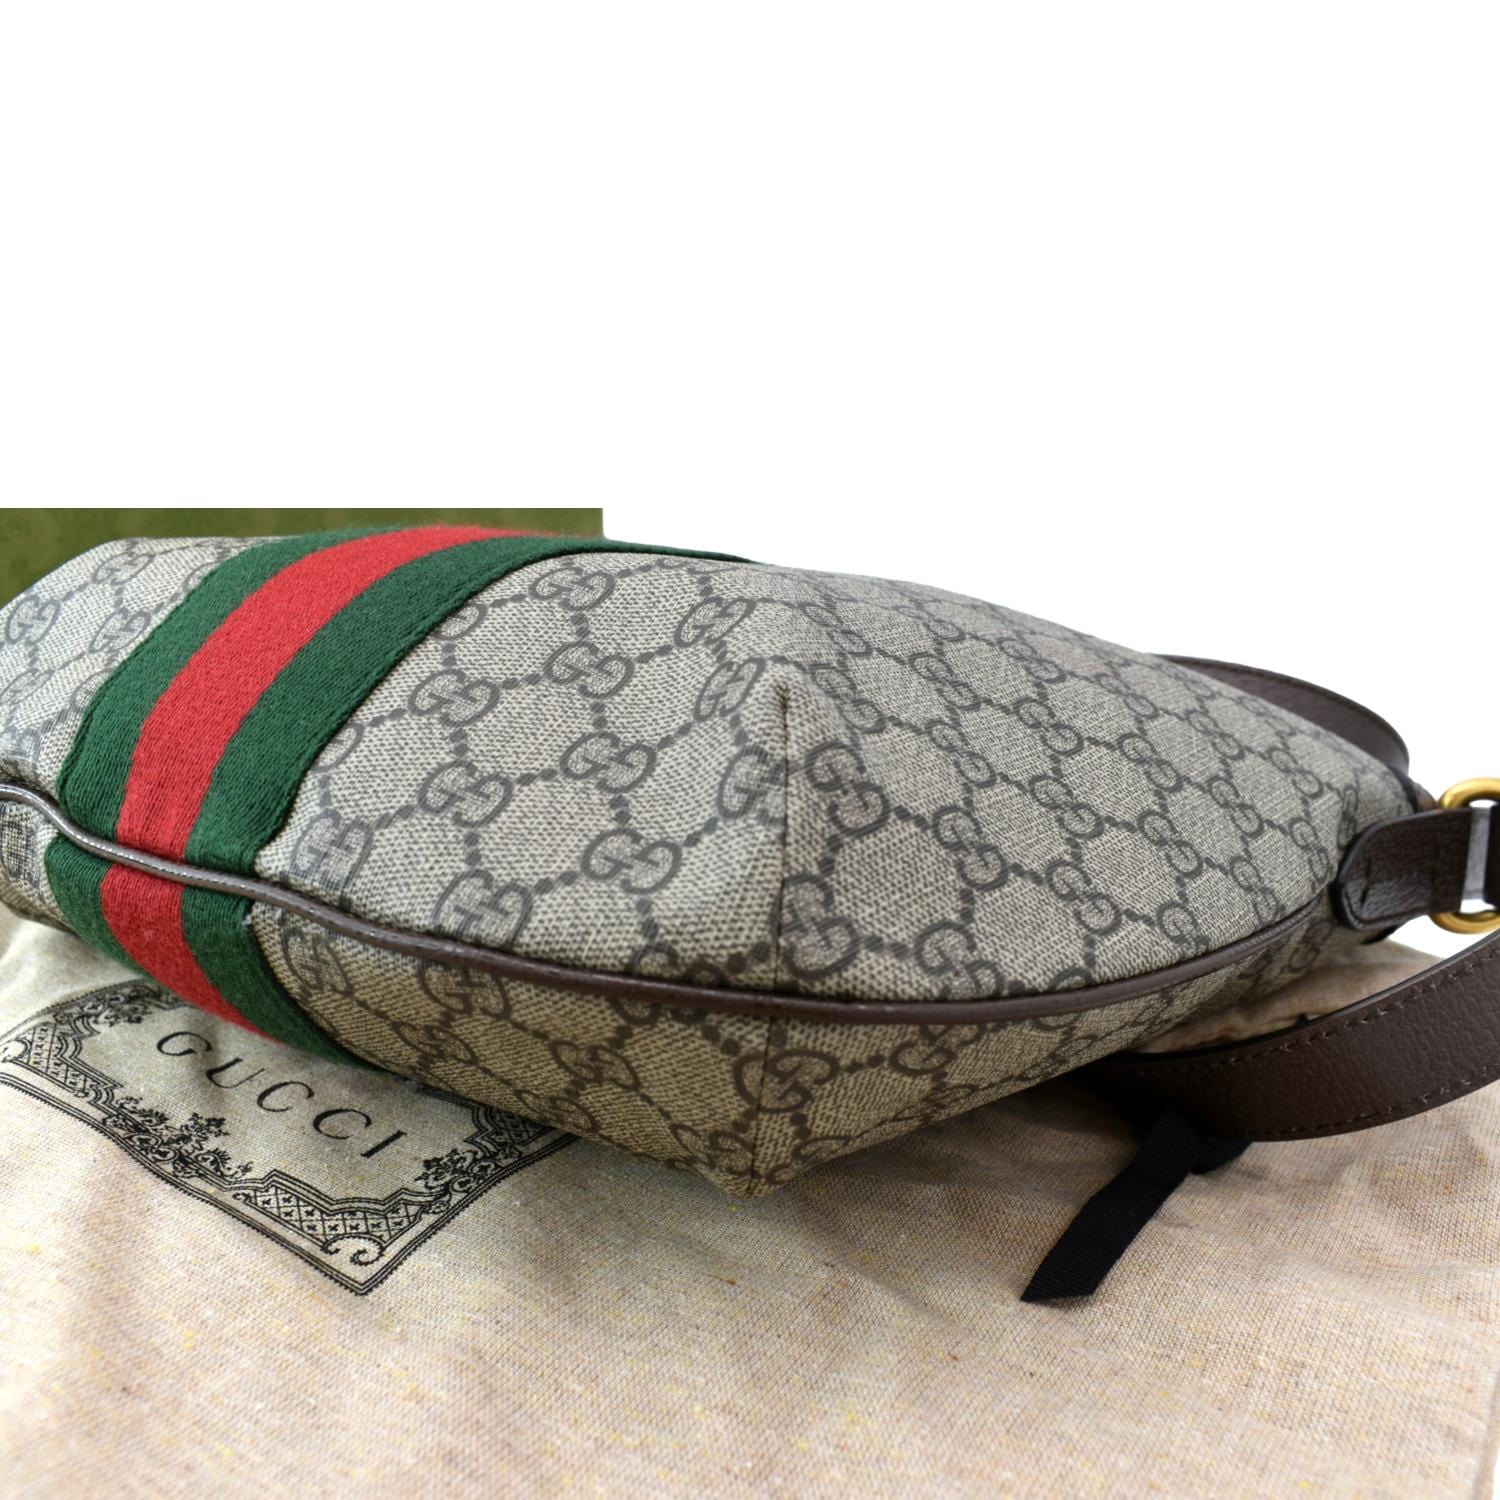 Beige Ophidia small GG-Supreme canvas shoulder bag, Gucci